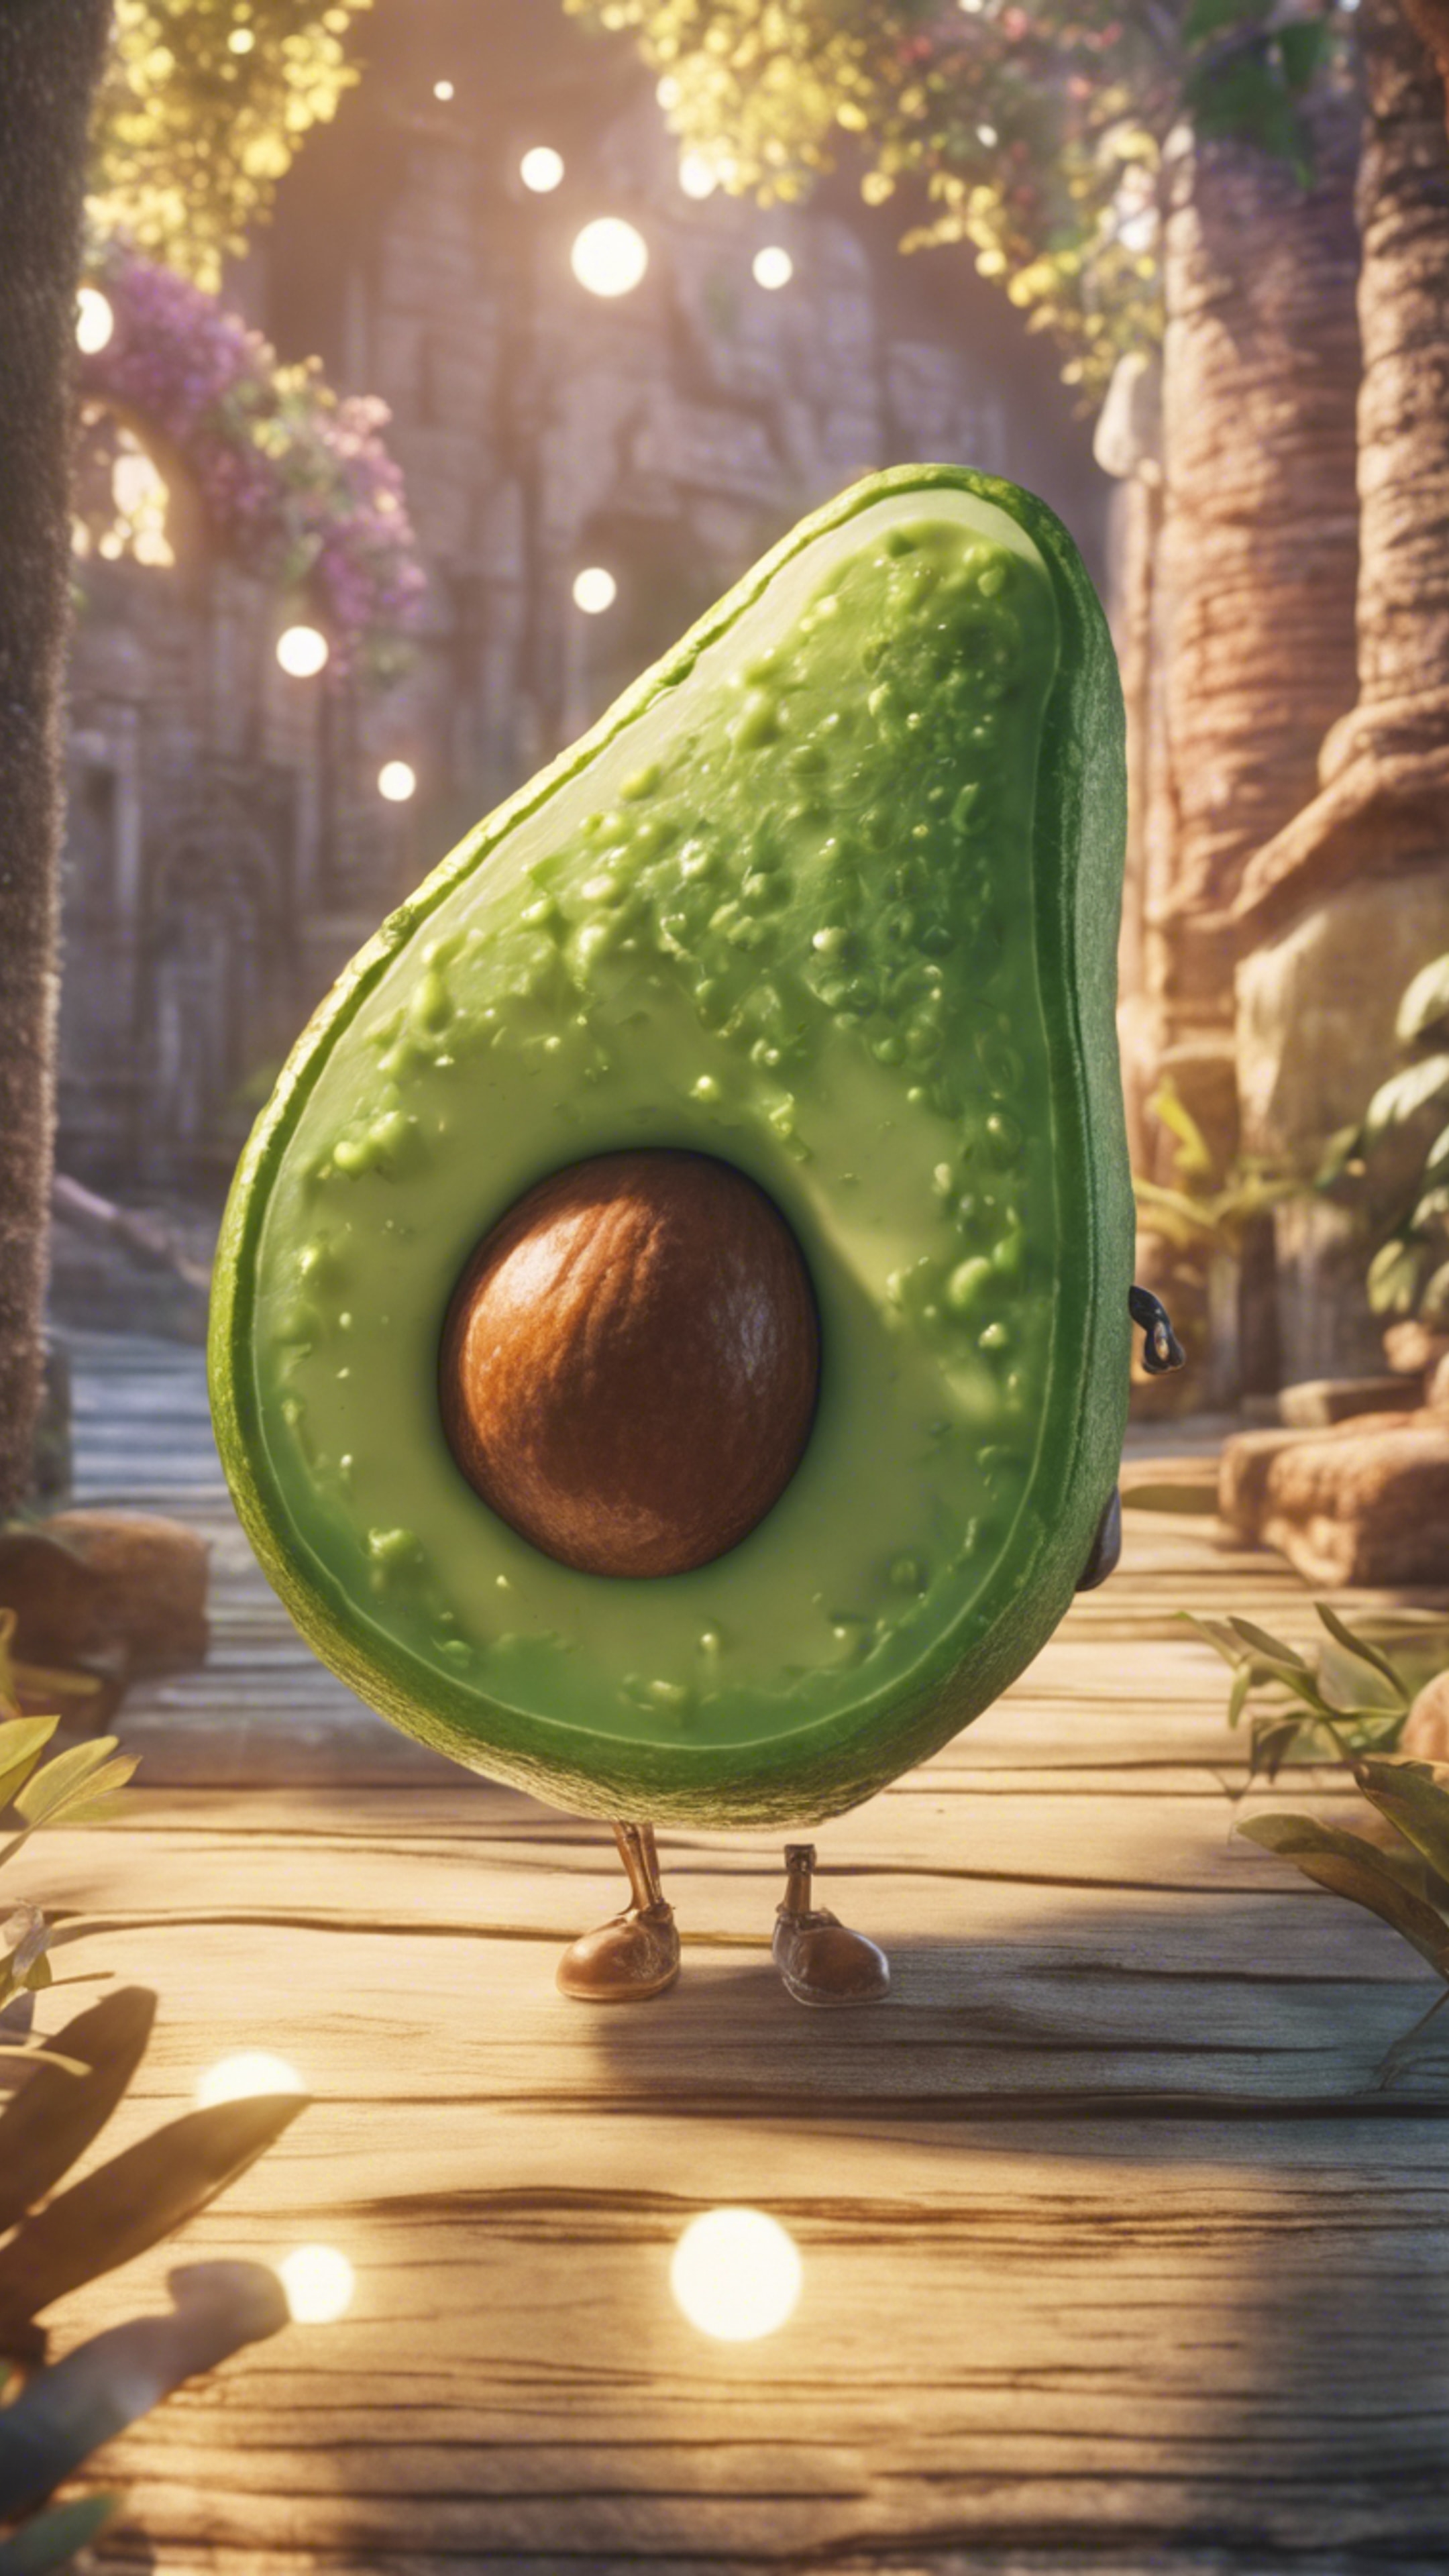 A manga-style scene of an avocado on a magical journey壁紙[452ab1c8ad254f0b95e7]